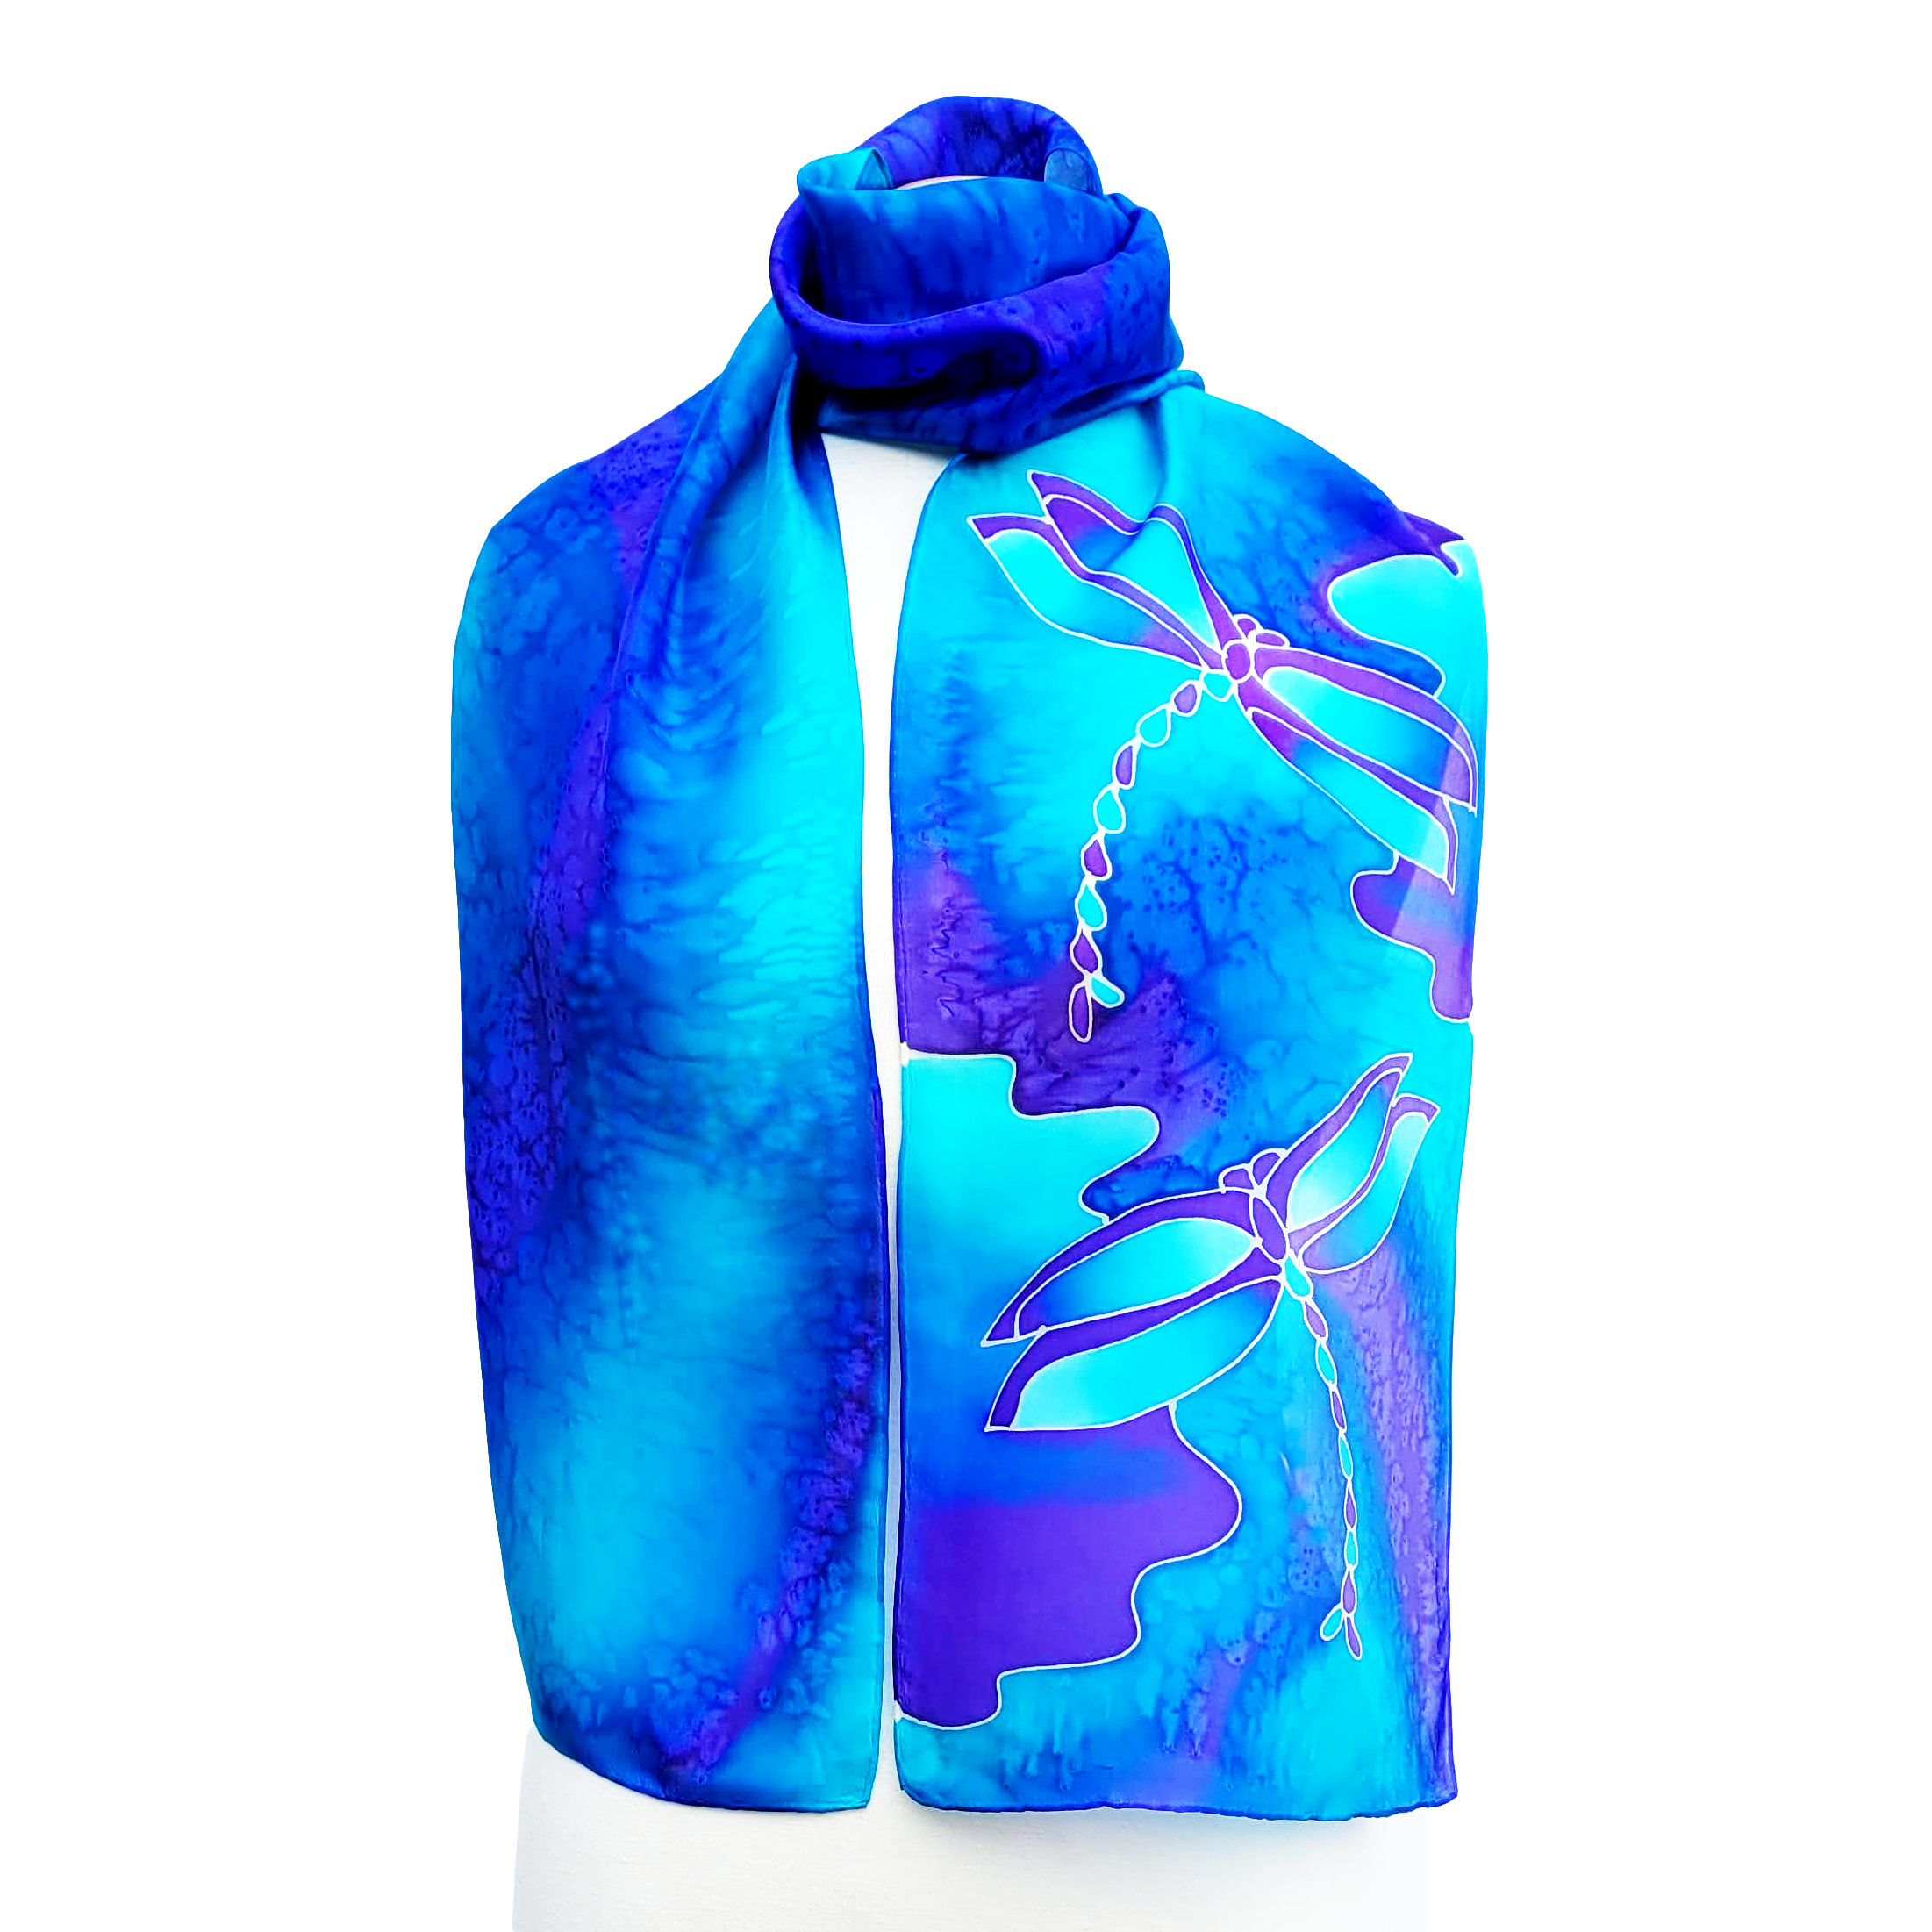 silk scarf hand painted dragonflies blue and purple color handmade by Lynne Kiel